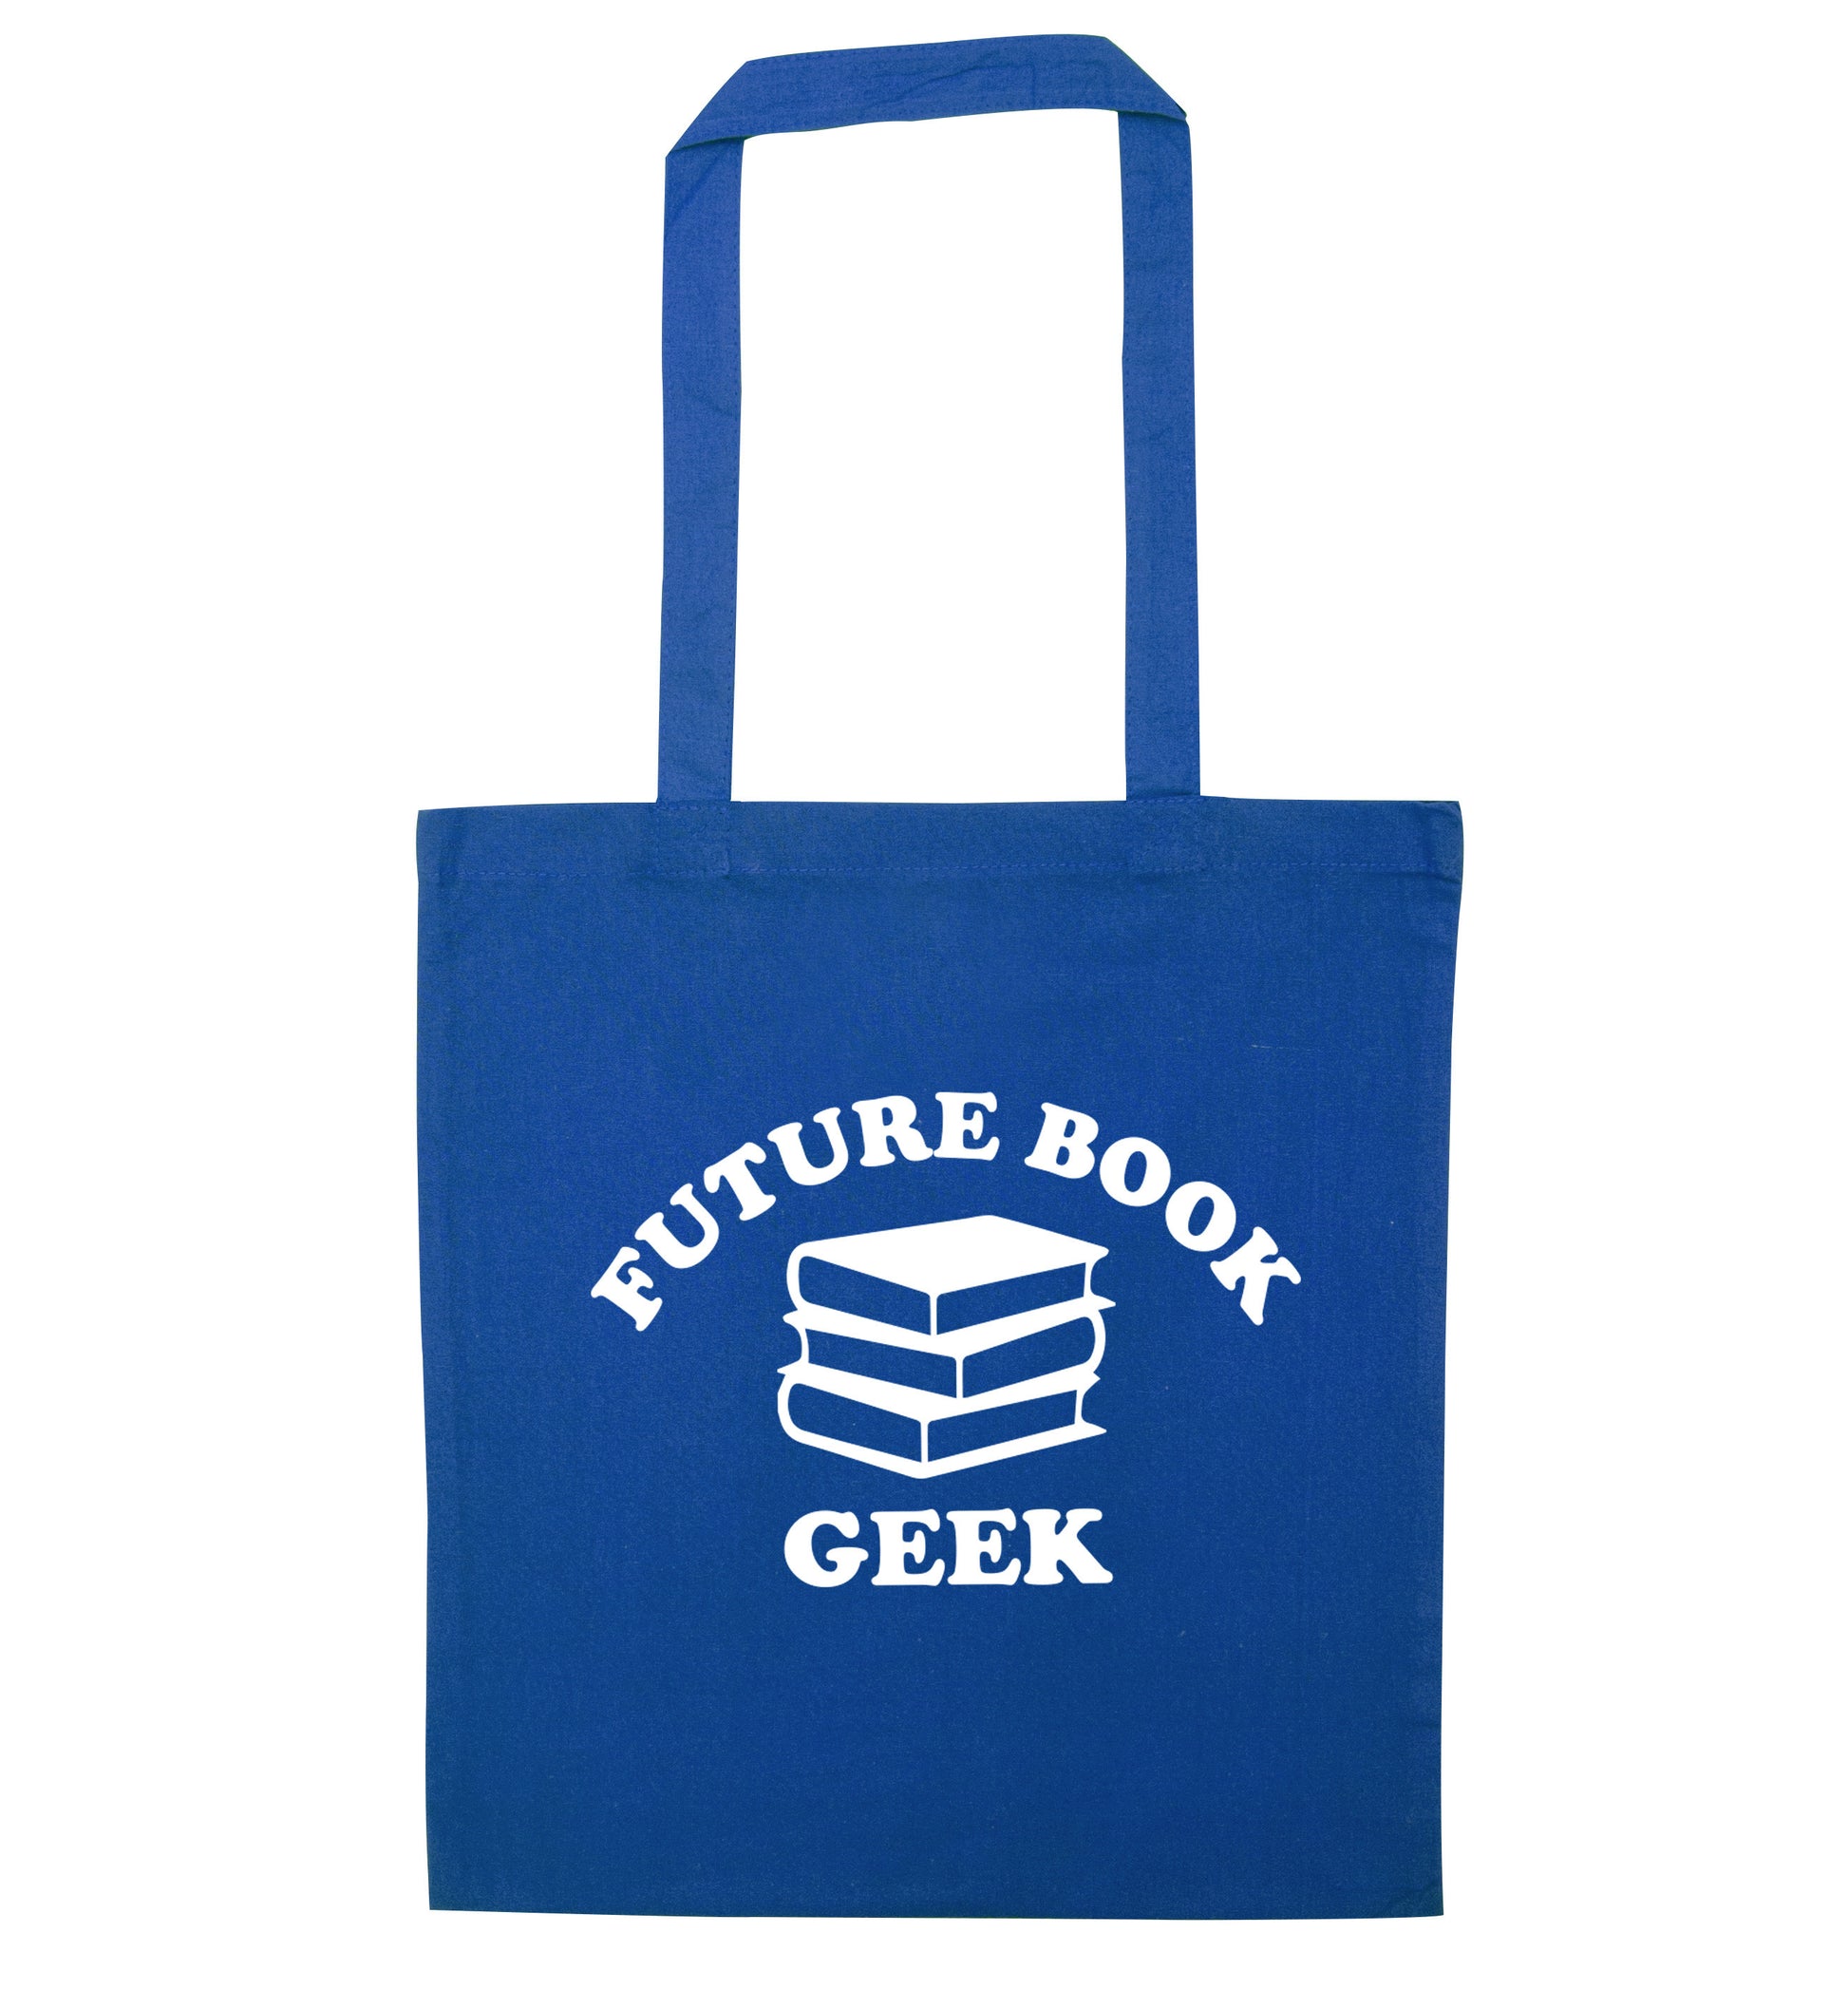 Future book geek blue tote bag